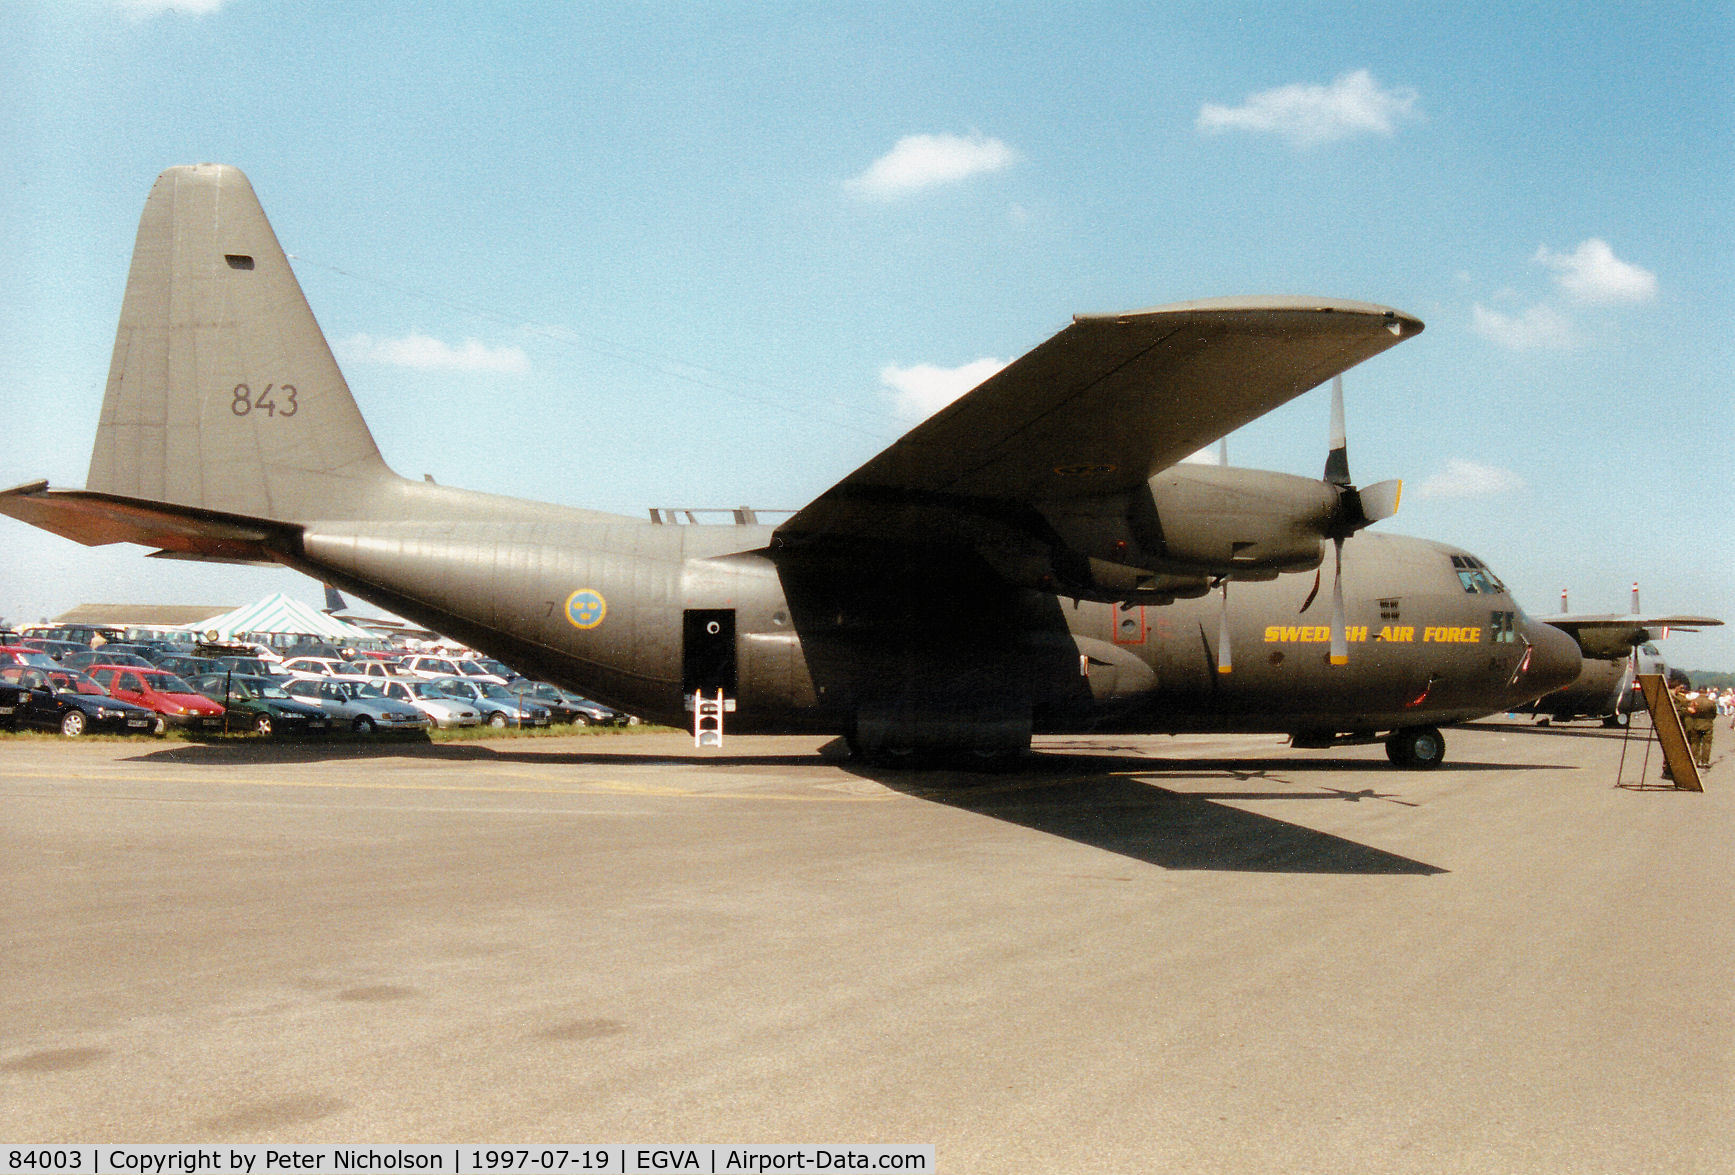 84003, Lockheed C-130H Hercules C/N 382-4628, C-130H Hercules, callsign Swedish 843, of F7 Wing Swedish Air Force on display at the 1997 Intnl Air Tattoo at RAF Fairford.